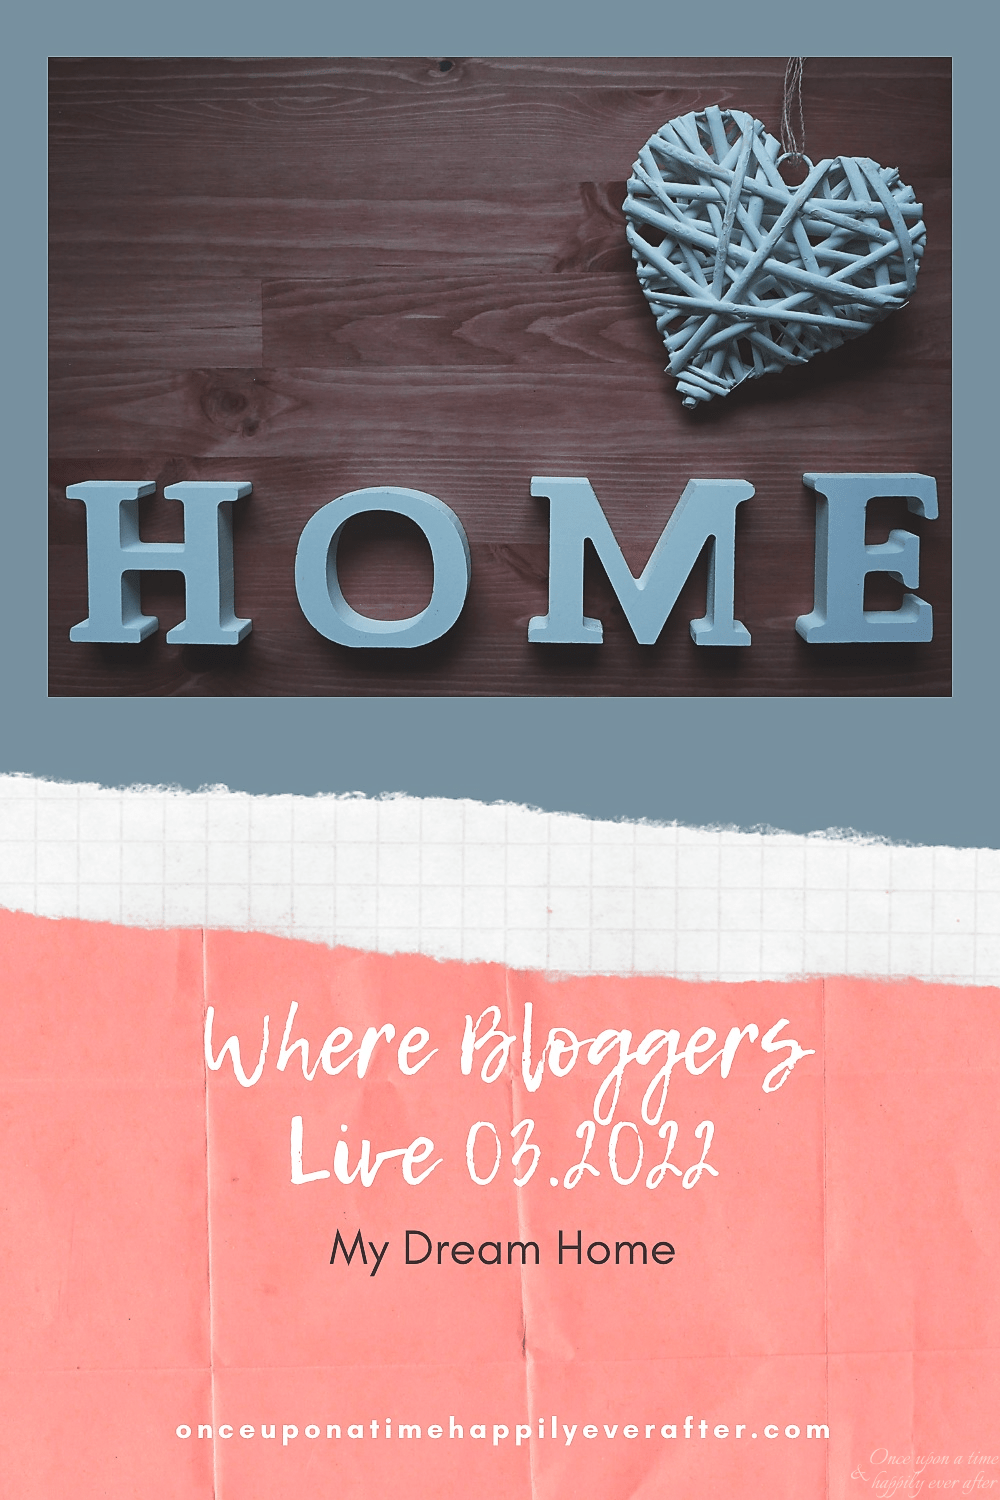 Where Bloggers Live 03.2022: My Dream Home